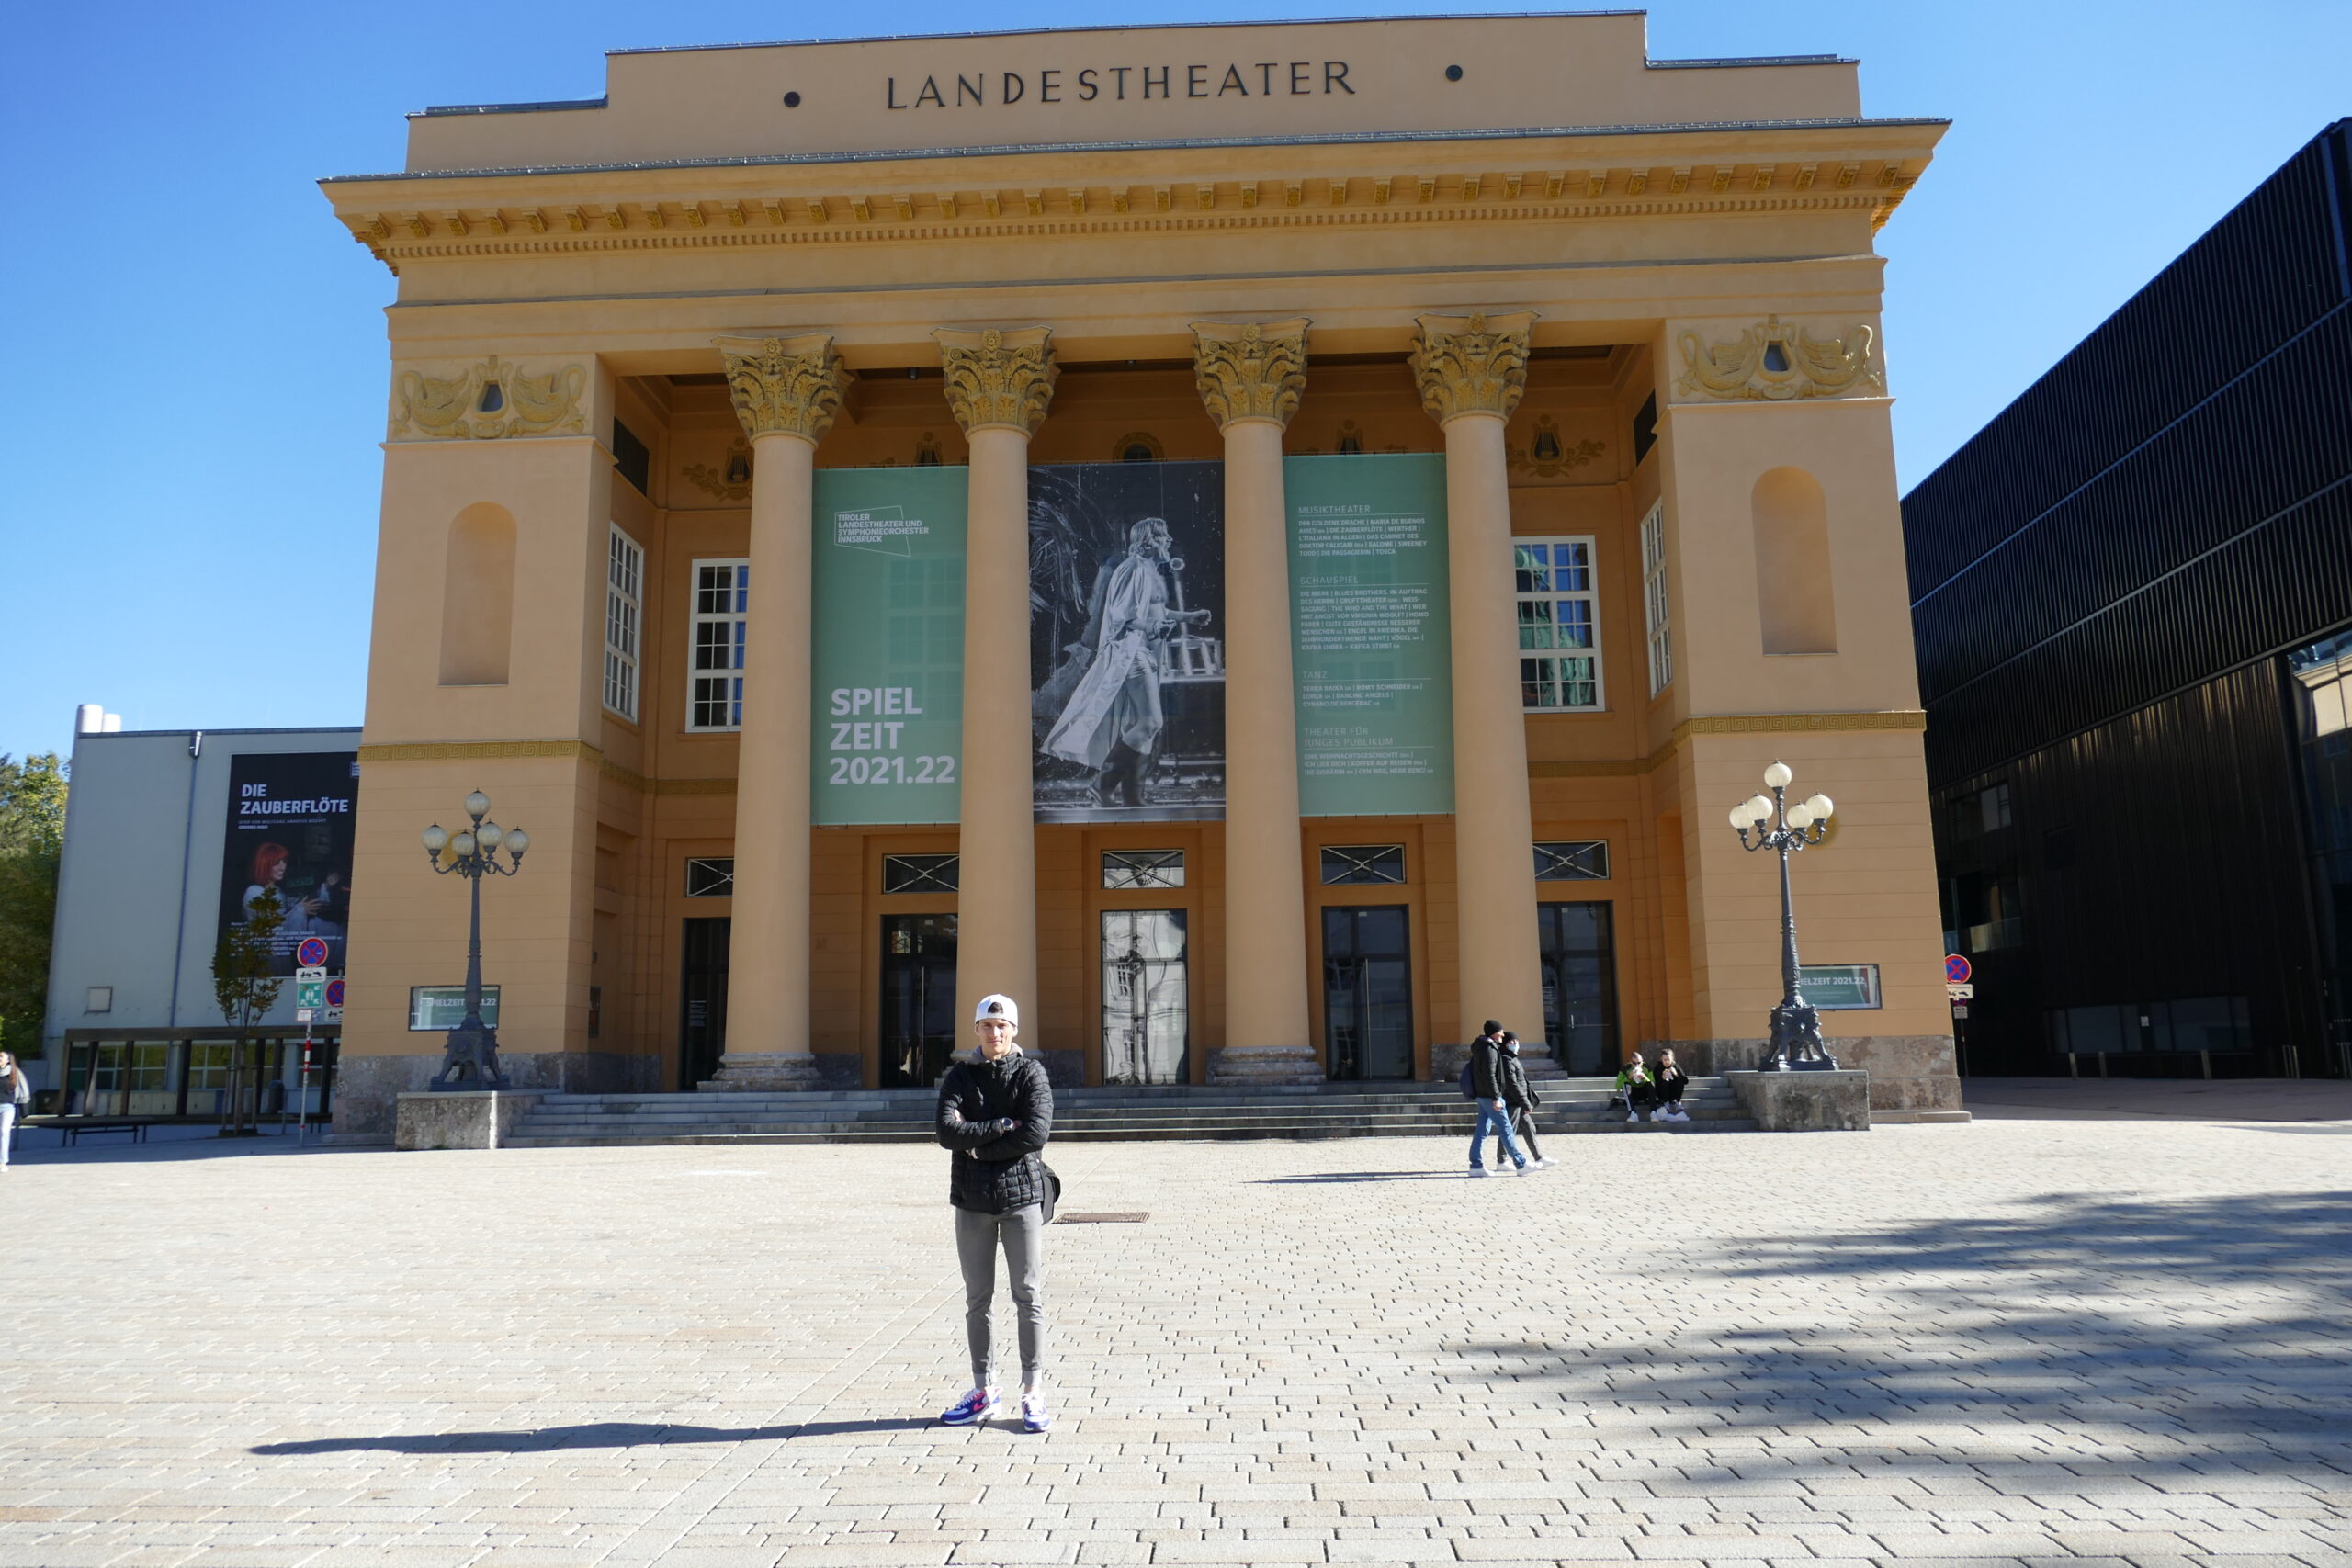 Landesteather Innsbruck